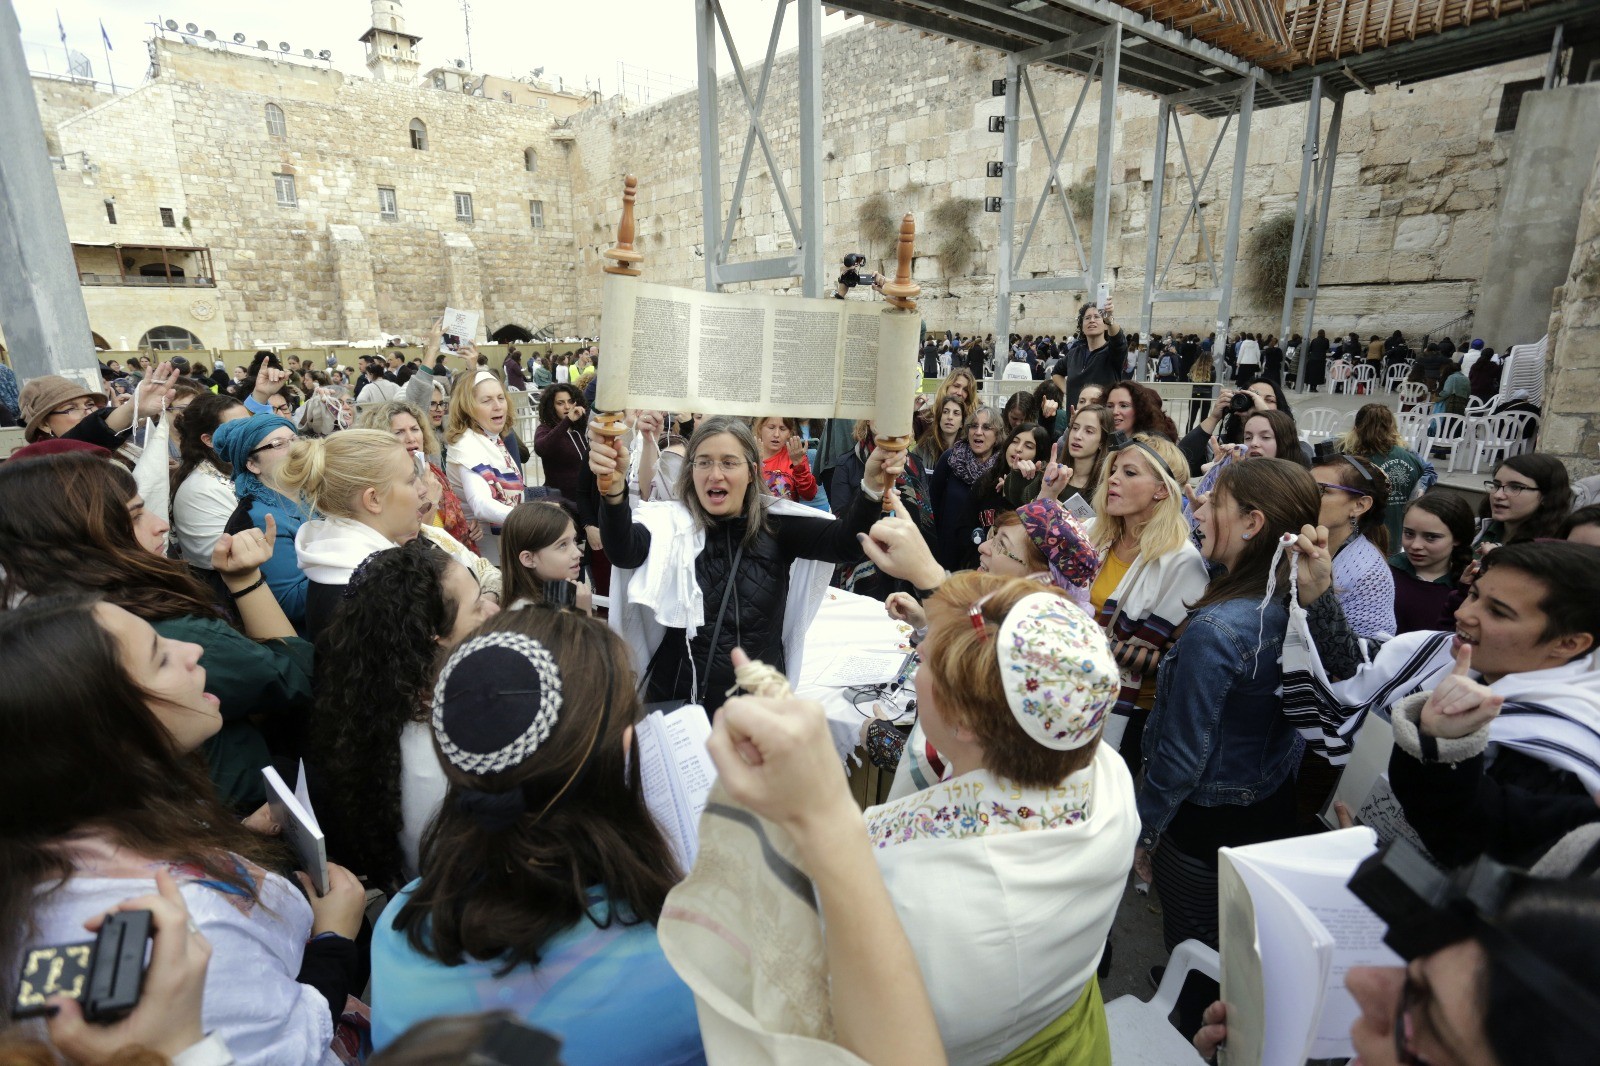 Rosh Hodesh service with a Torah